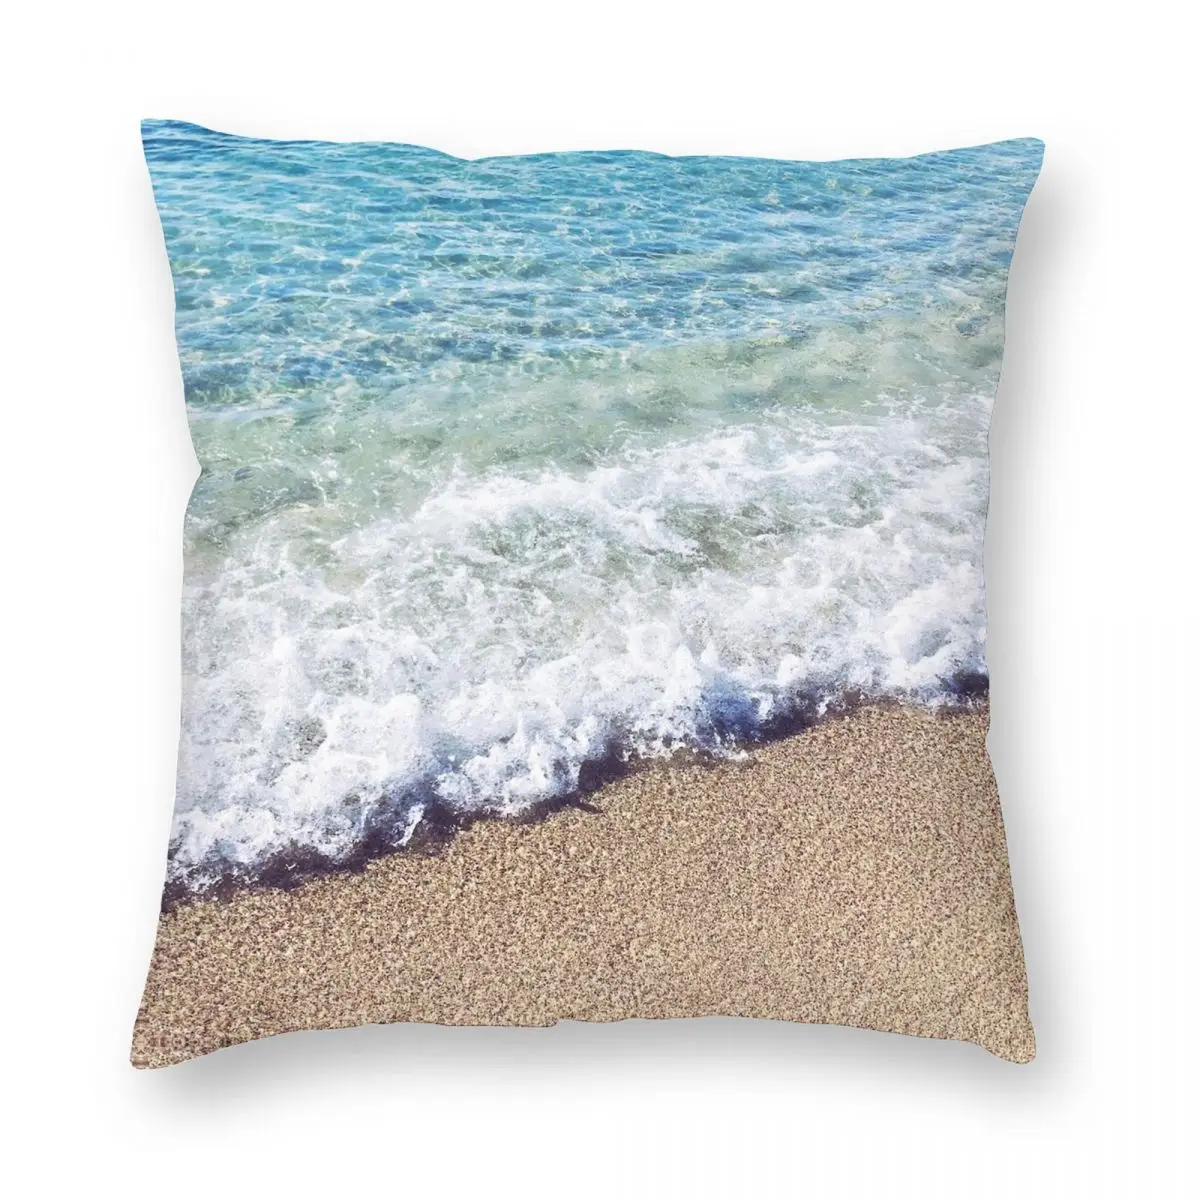 

Ocean Blue Shore Waves Square Pillowcase Polyester Linen Velvet Printed Zip Decorative Home Cushion Cover 45x45